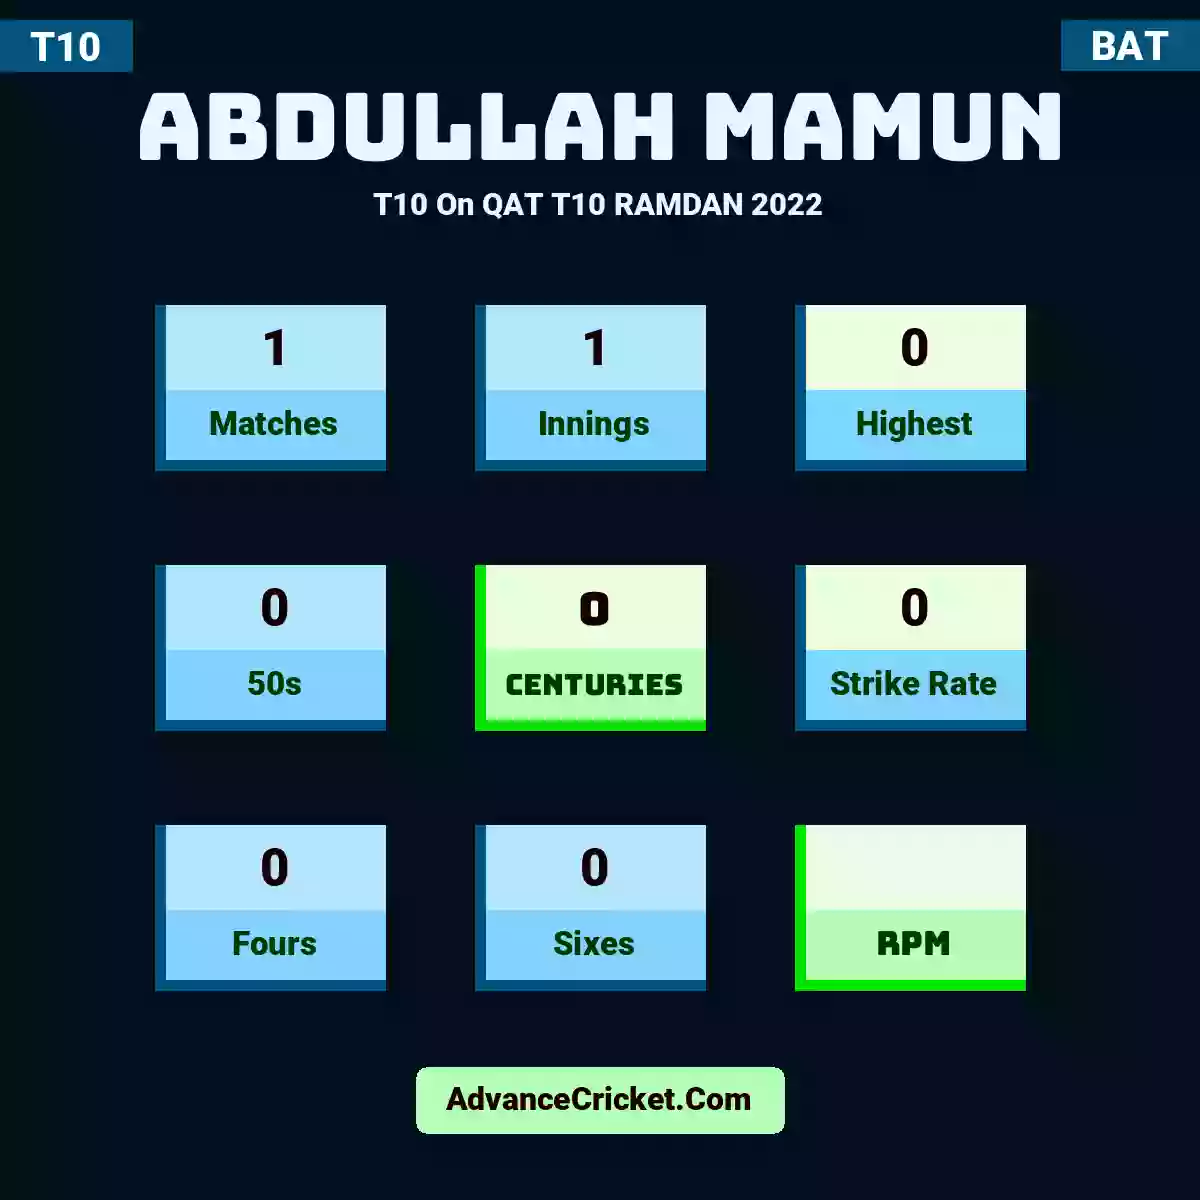 Abdullah Mamun T10  On QAT T10 RAMDAN 2022, Abdullah Mamun played 1 matches, scored 0 runs as highest, 0 half-centuries, and 0 centuries, with a strike rate of 0. A.Mamun hit 0 fours and 0 sixes.